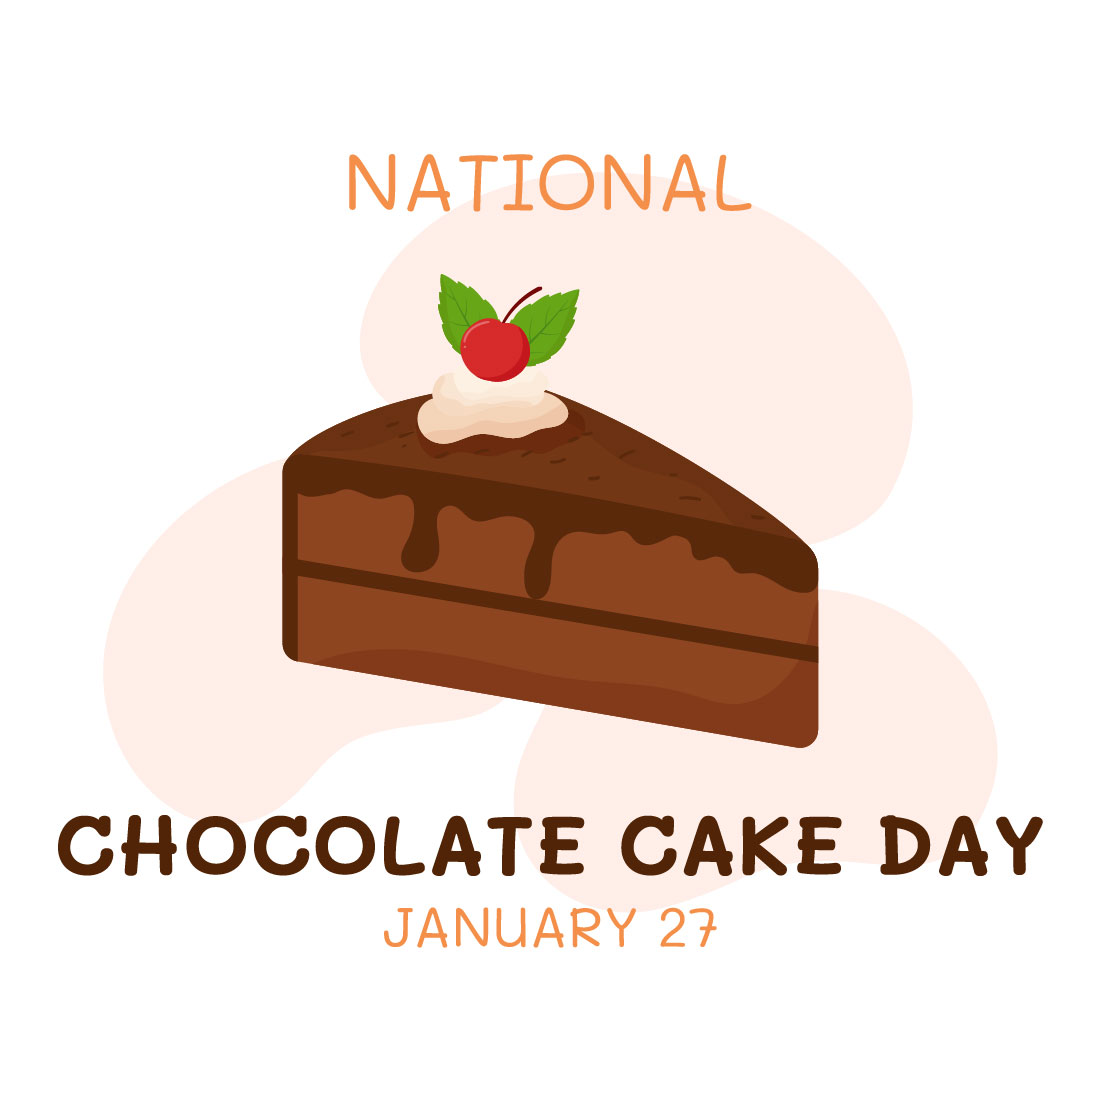 National Chocolate Cake Day Illustration cover image.